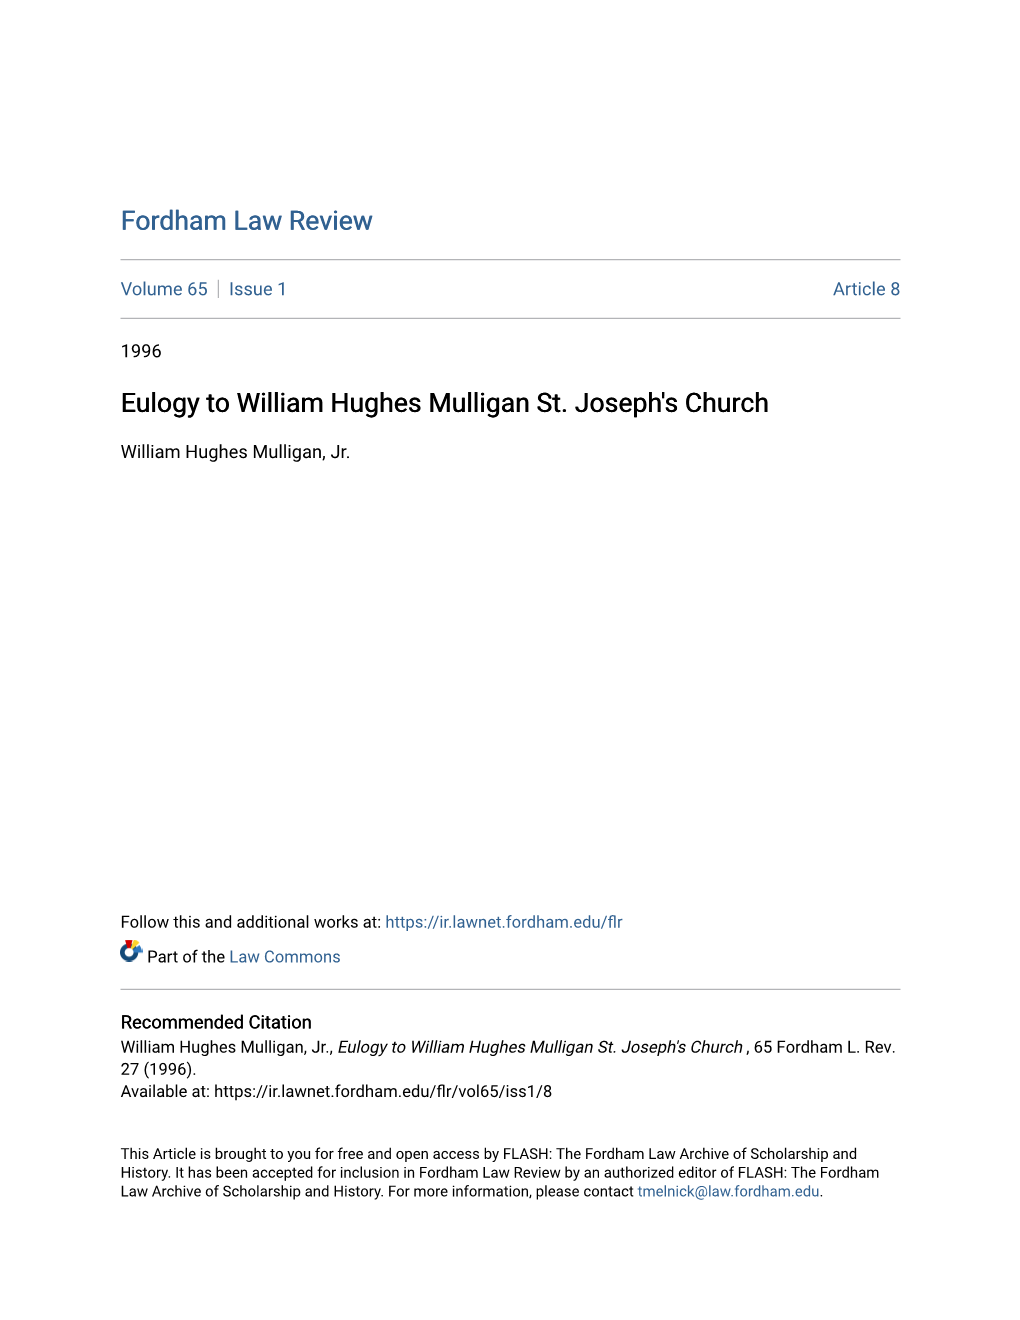 Eulogy to William Hughes Mulligan St. Joseph's Church